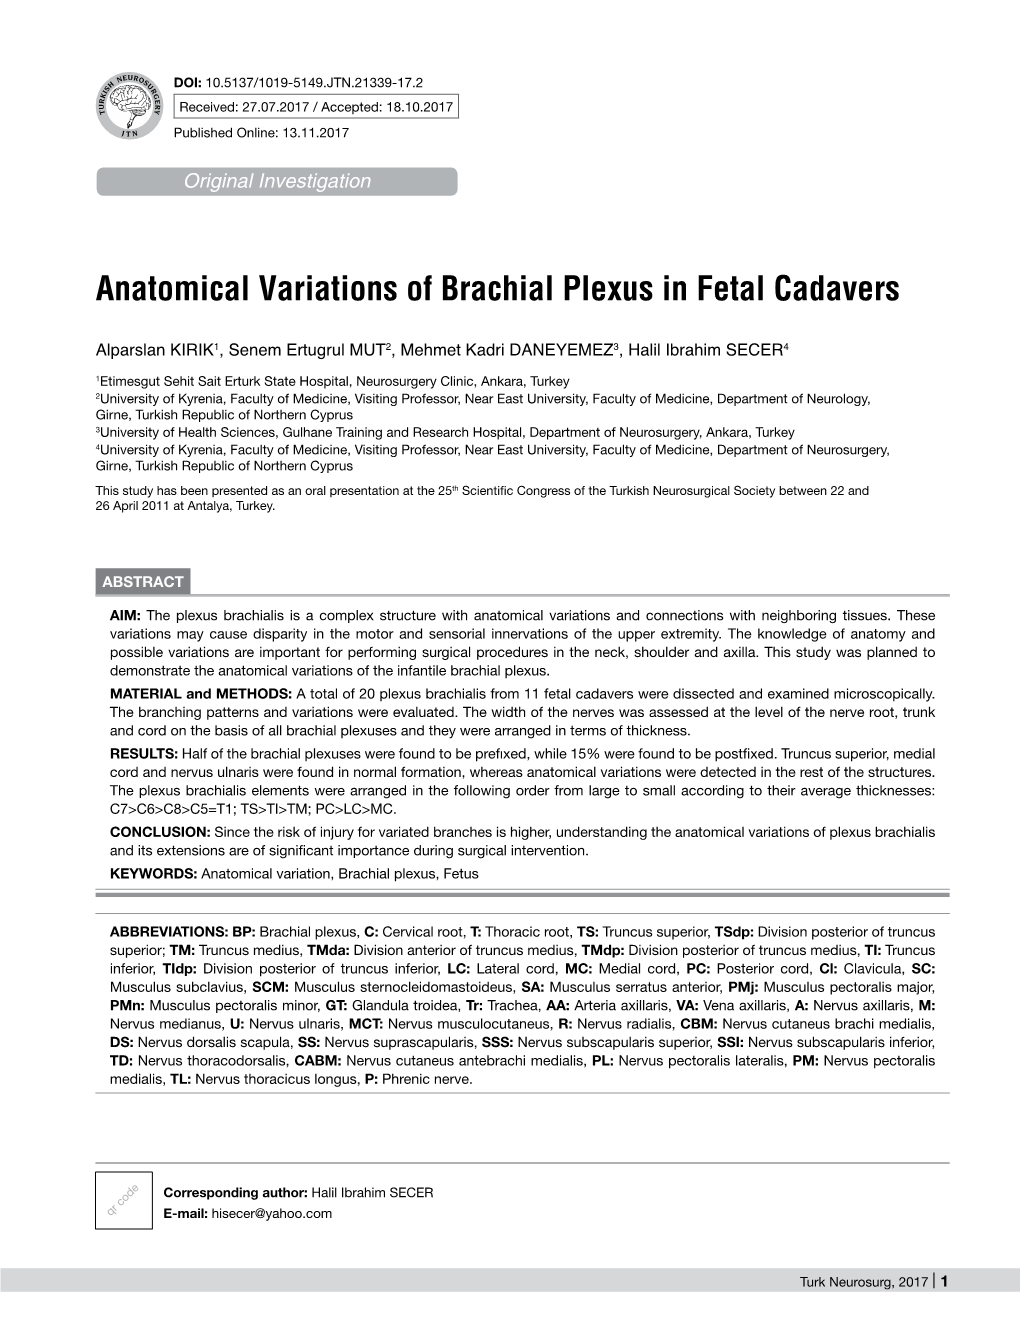 Anatomical Variations of Brachial Plexus in Fetal Cadavers